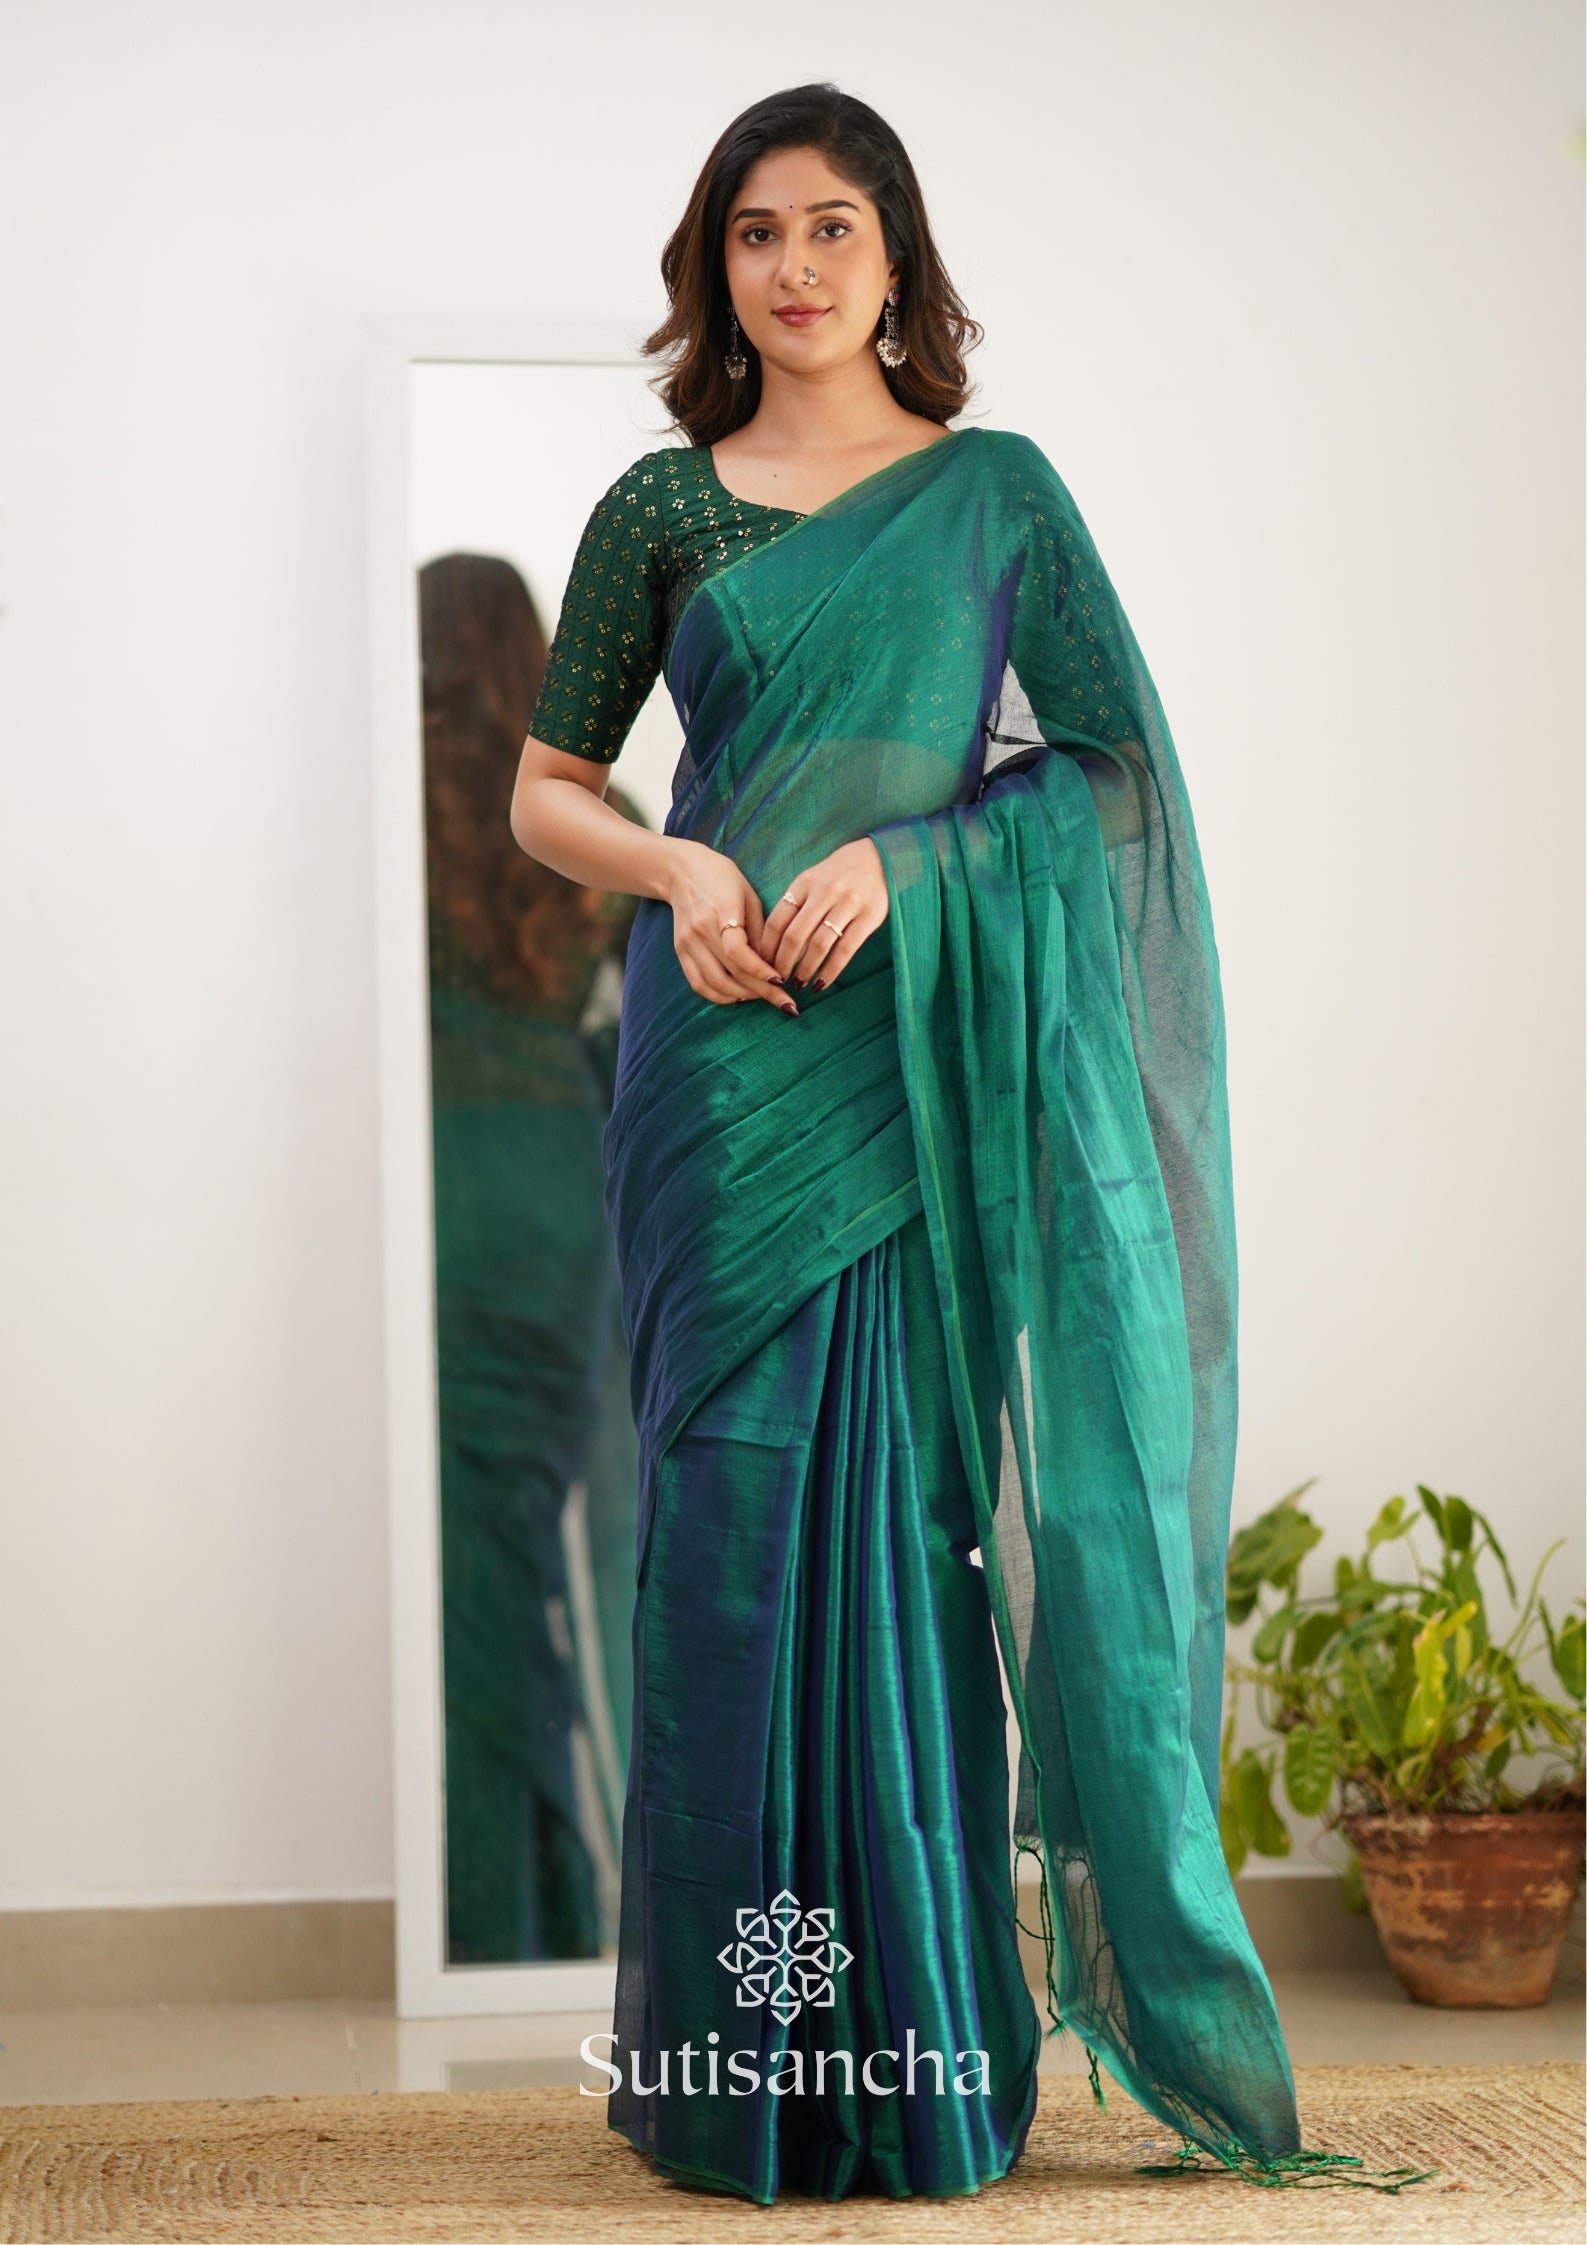 Sutisancha Rama Handloom Tissue Saree With Designer Blouse